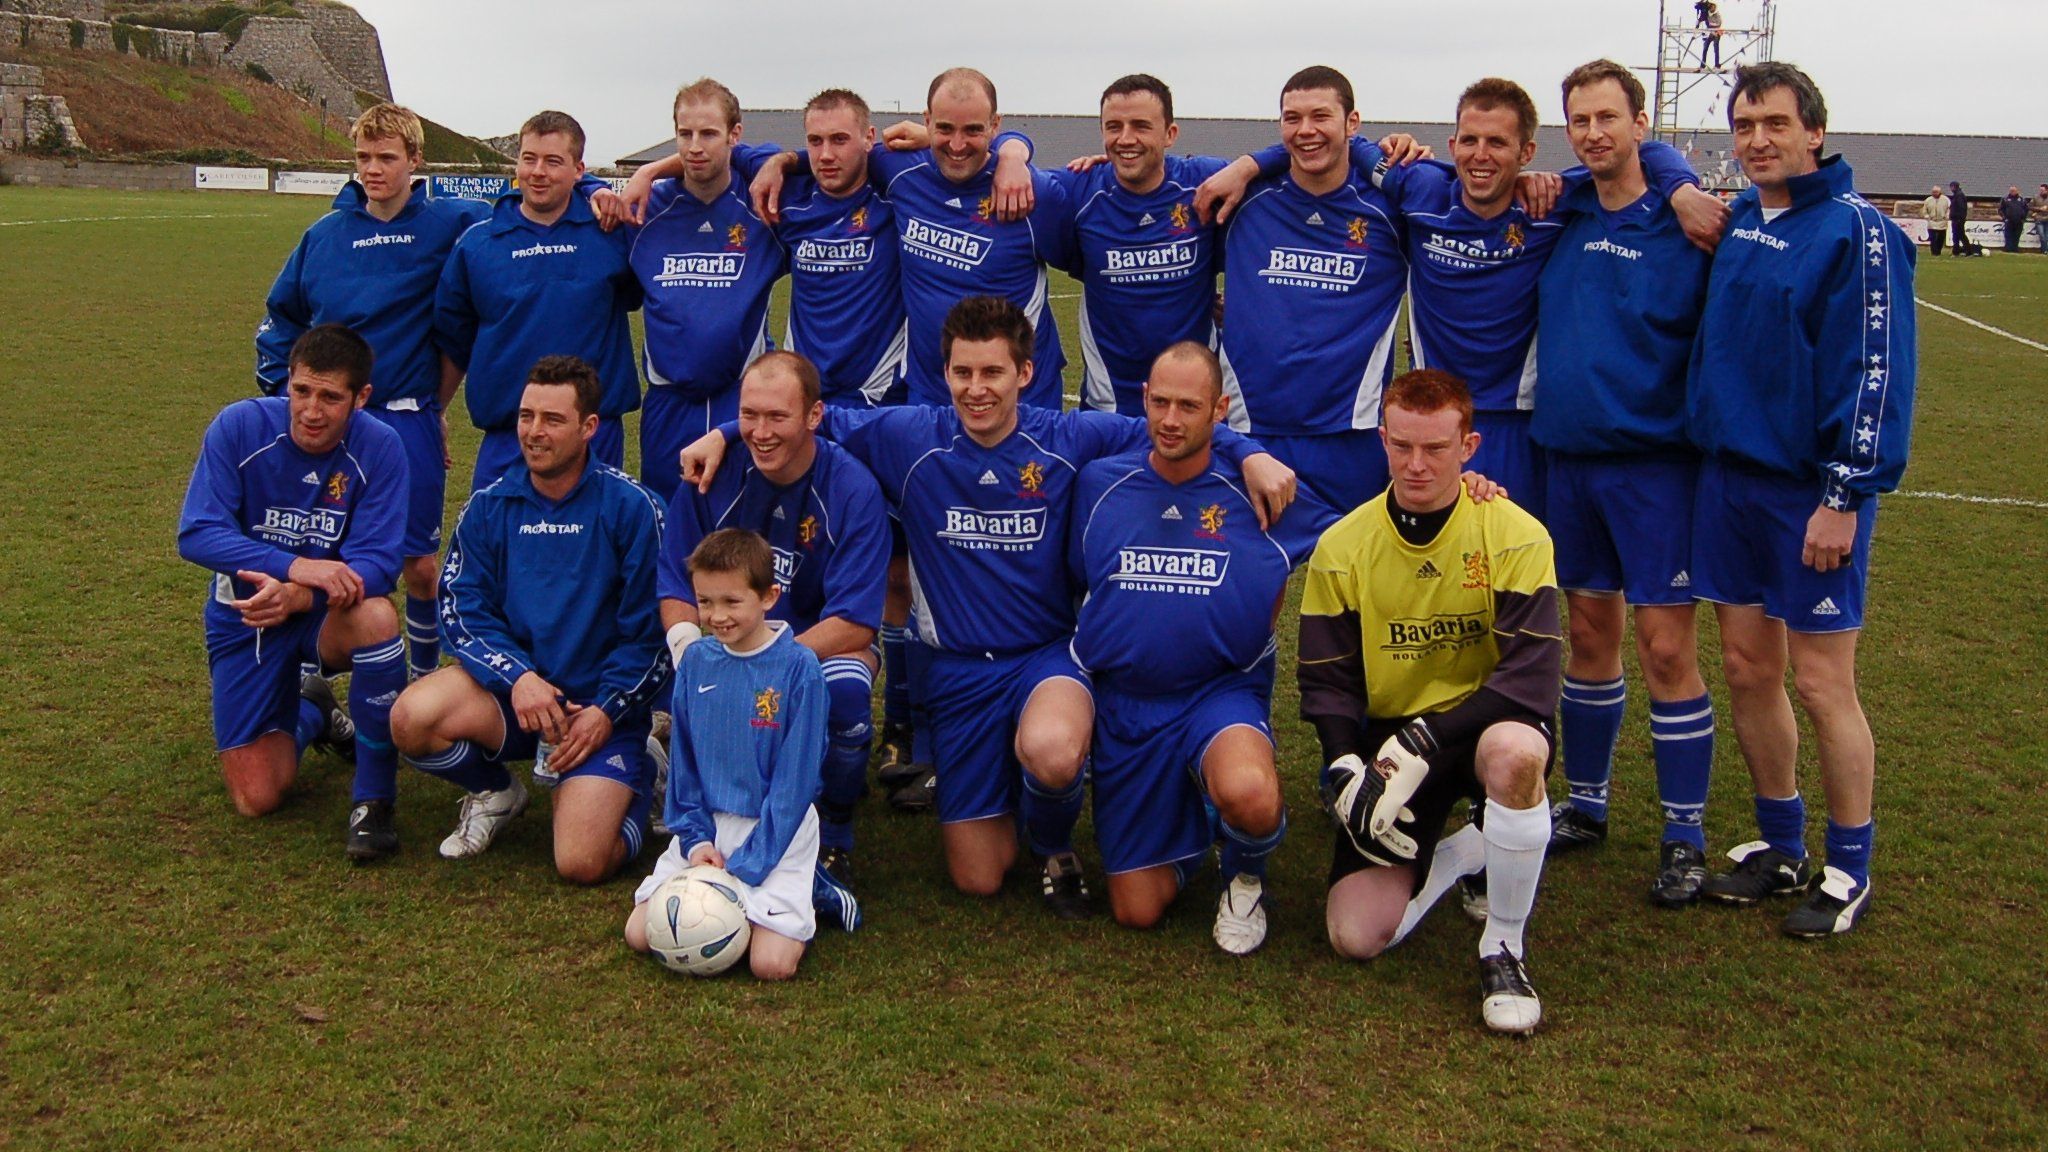 Alderney's football team